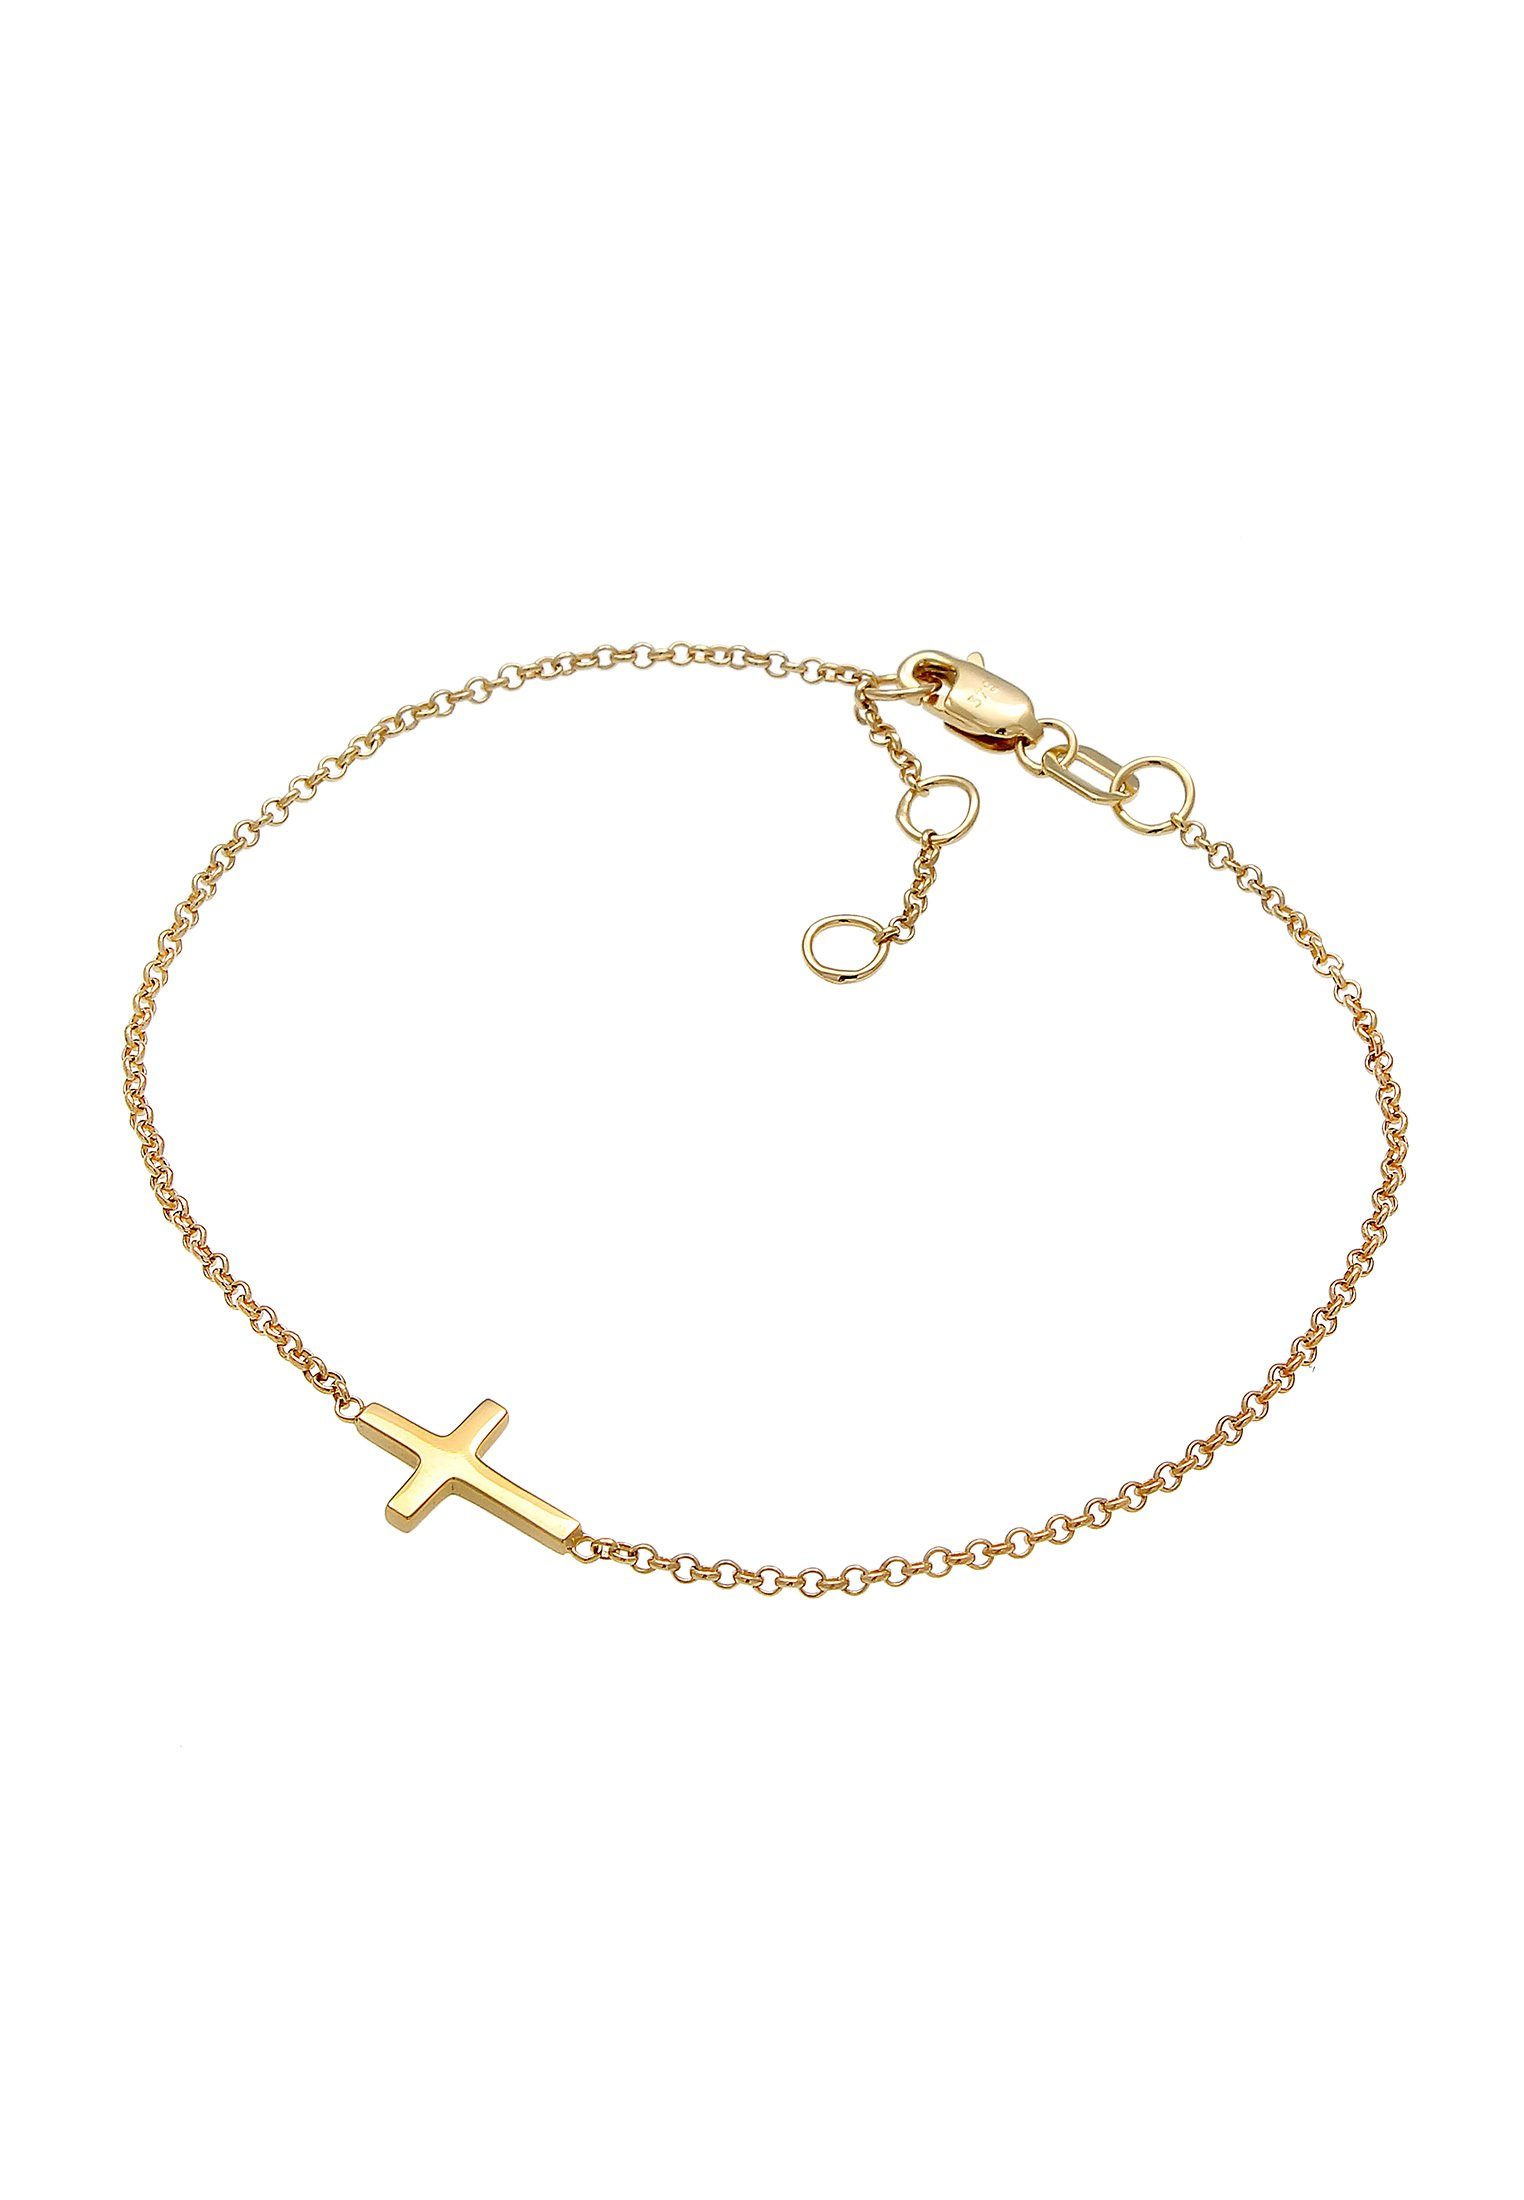 Mädchen Kommunion Armband Kreuz Engel Herz Kugel Armkette Silber 925 15 17 18 cm 